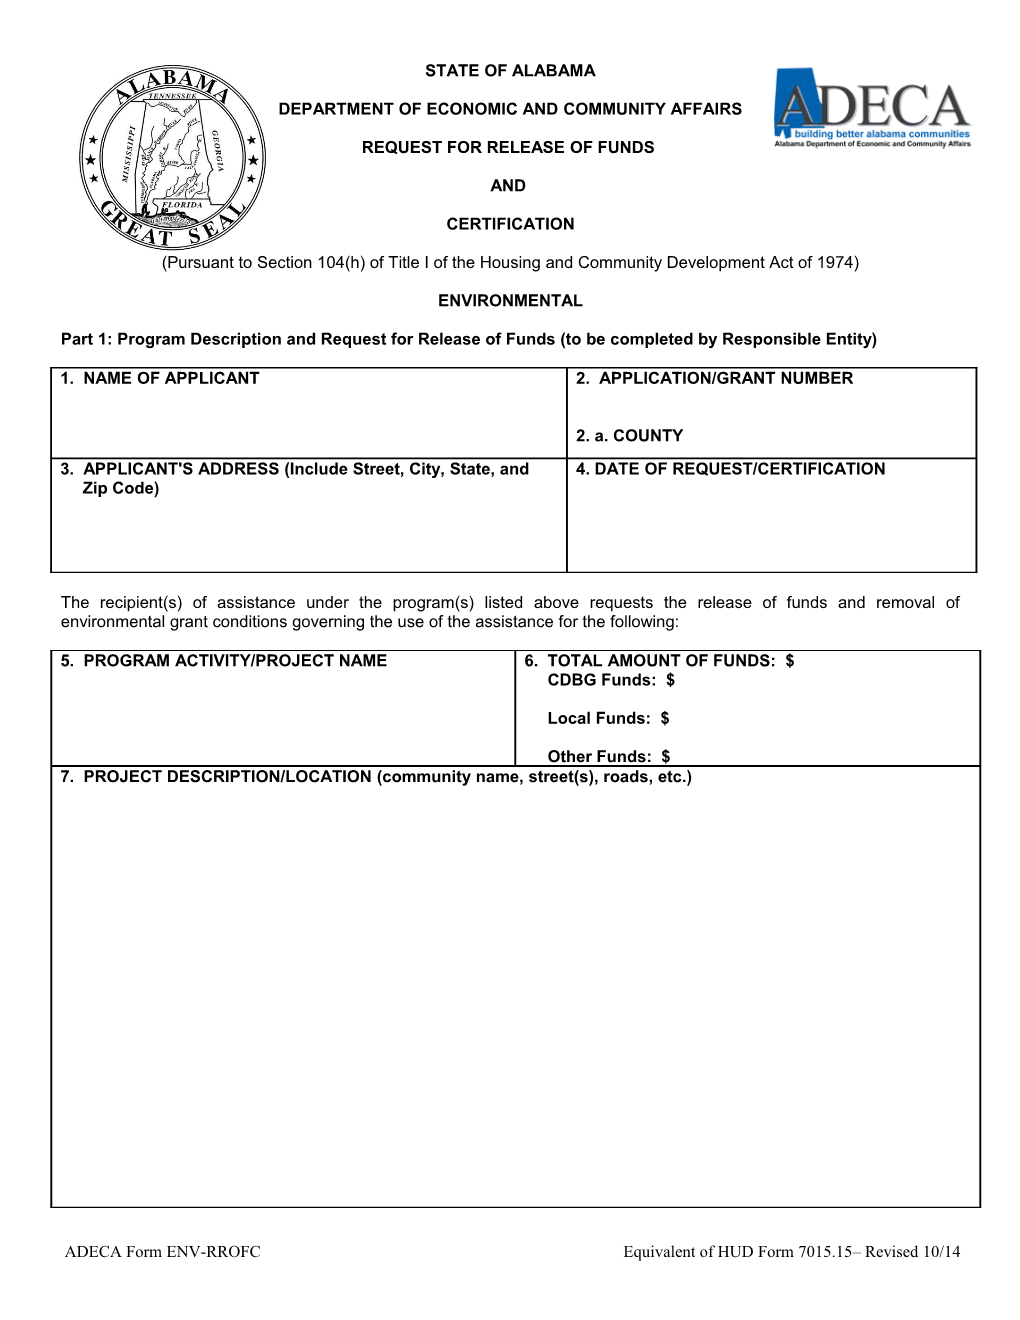 Environmental RROF Certification Form Revised 5-13-09